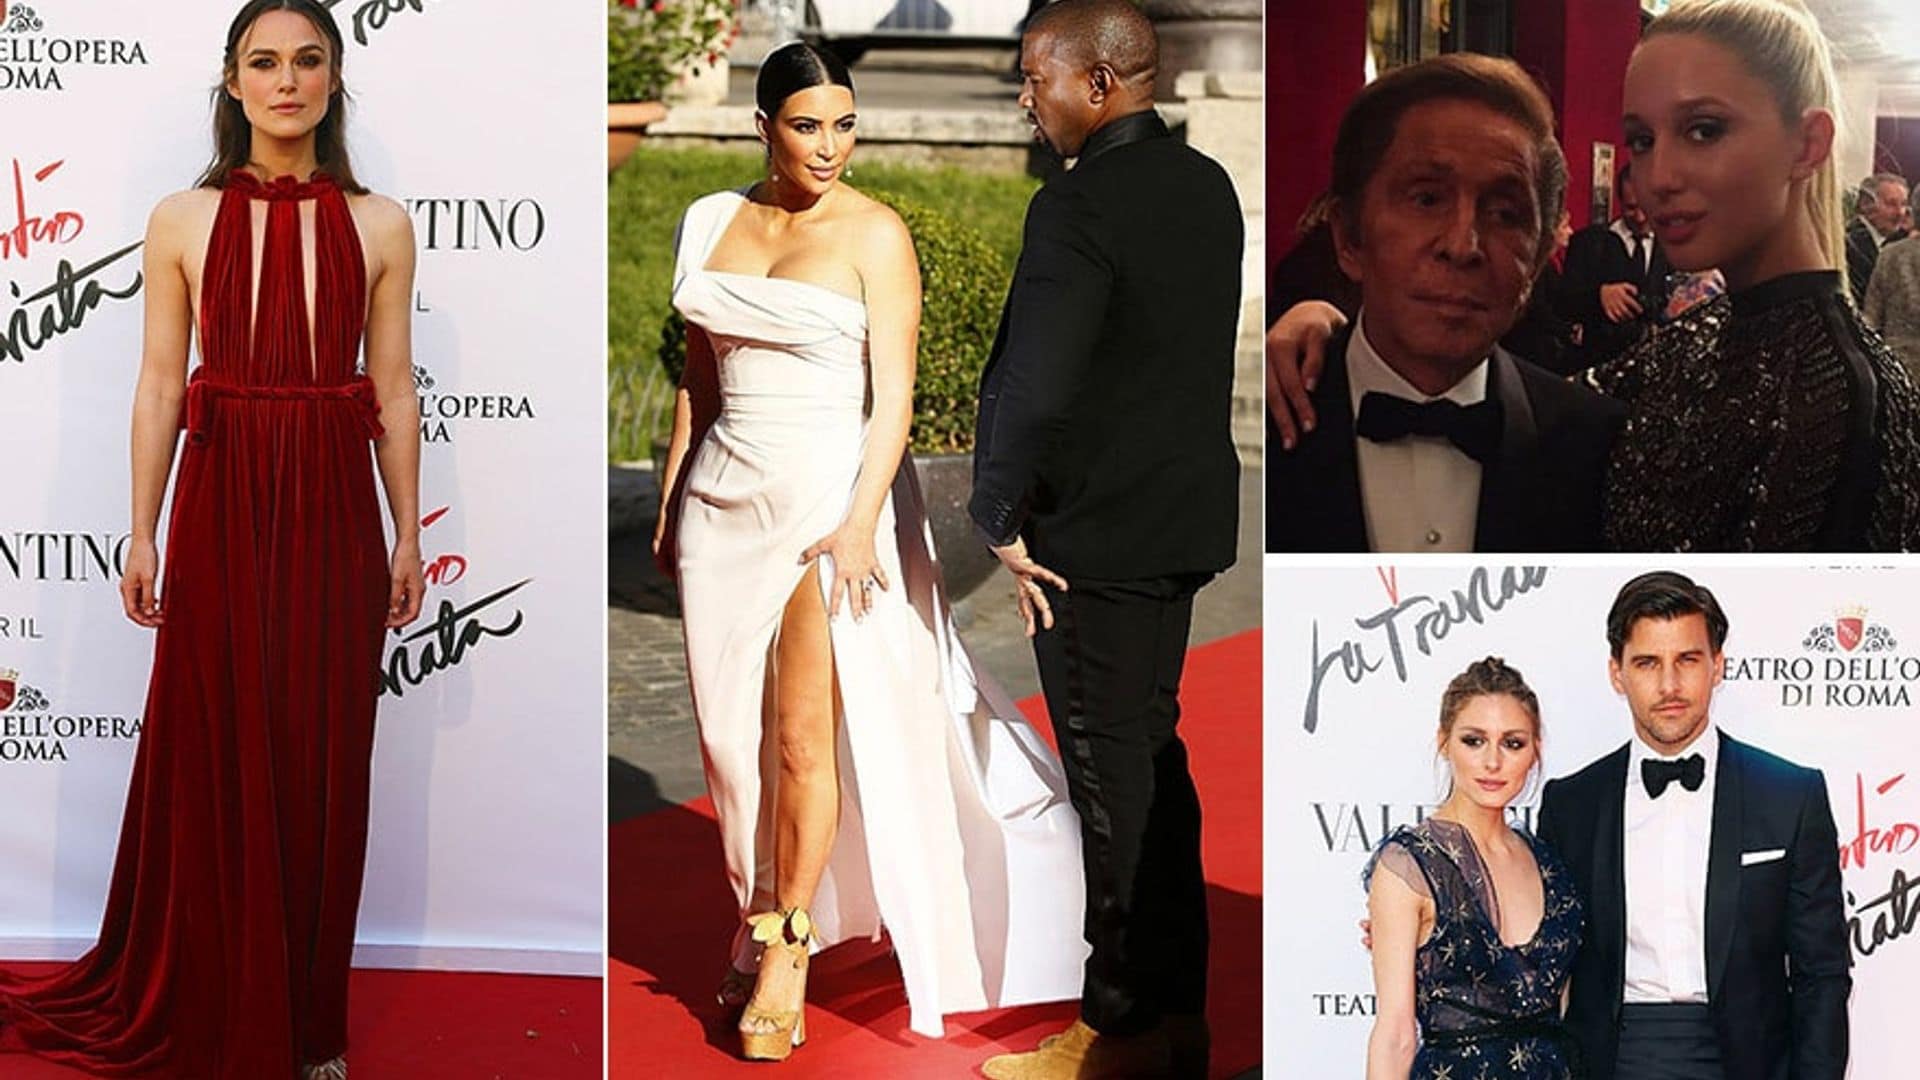 Kim Kardashian and Kanye West mingle with royals at 'La Traviata' opening in Rome